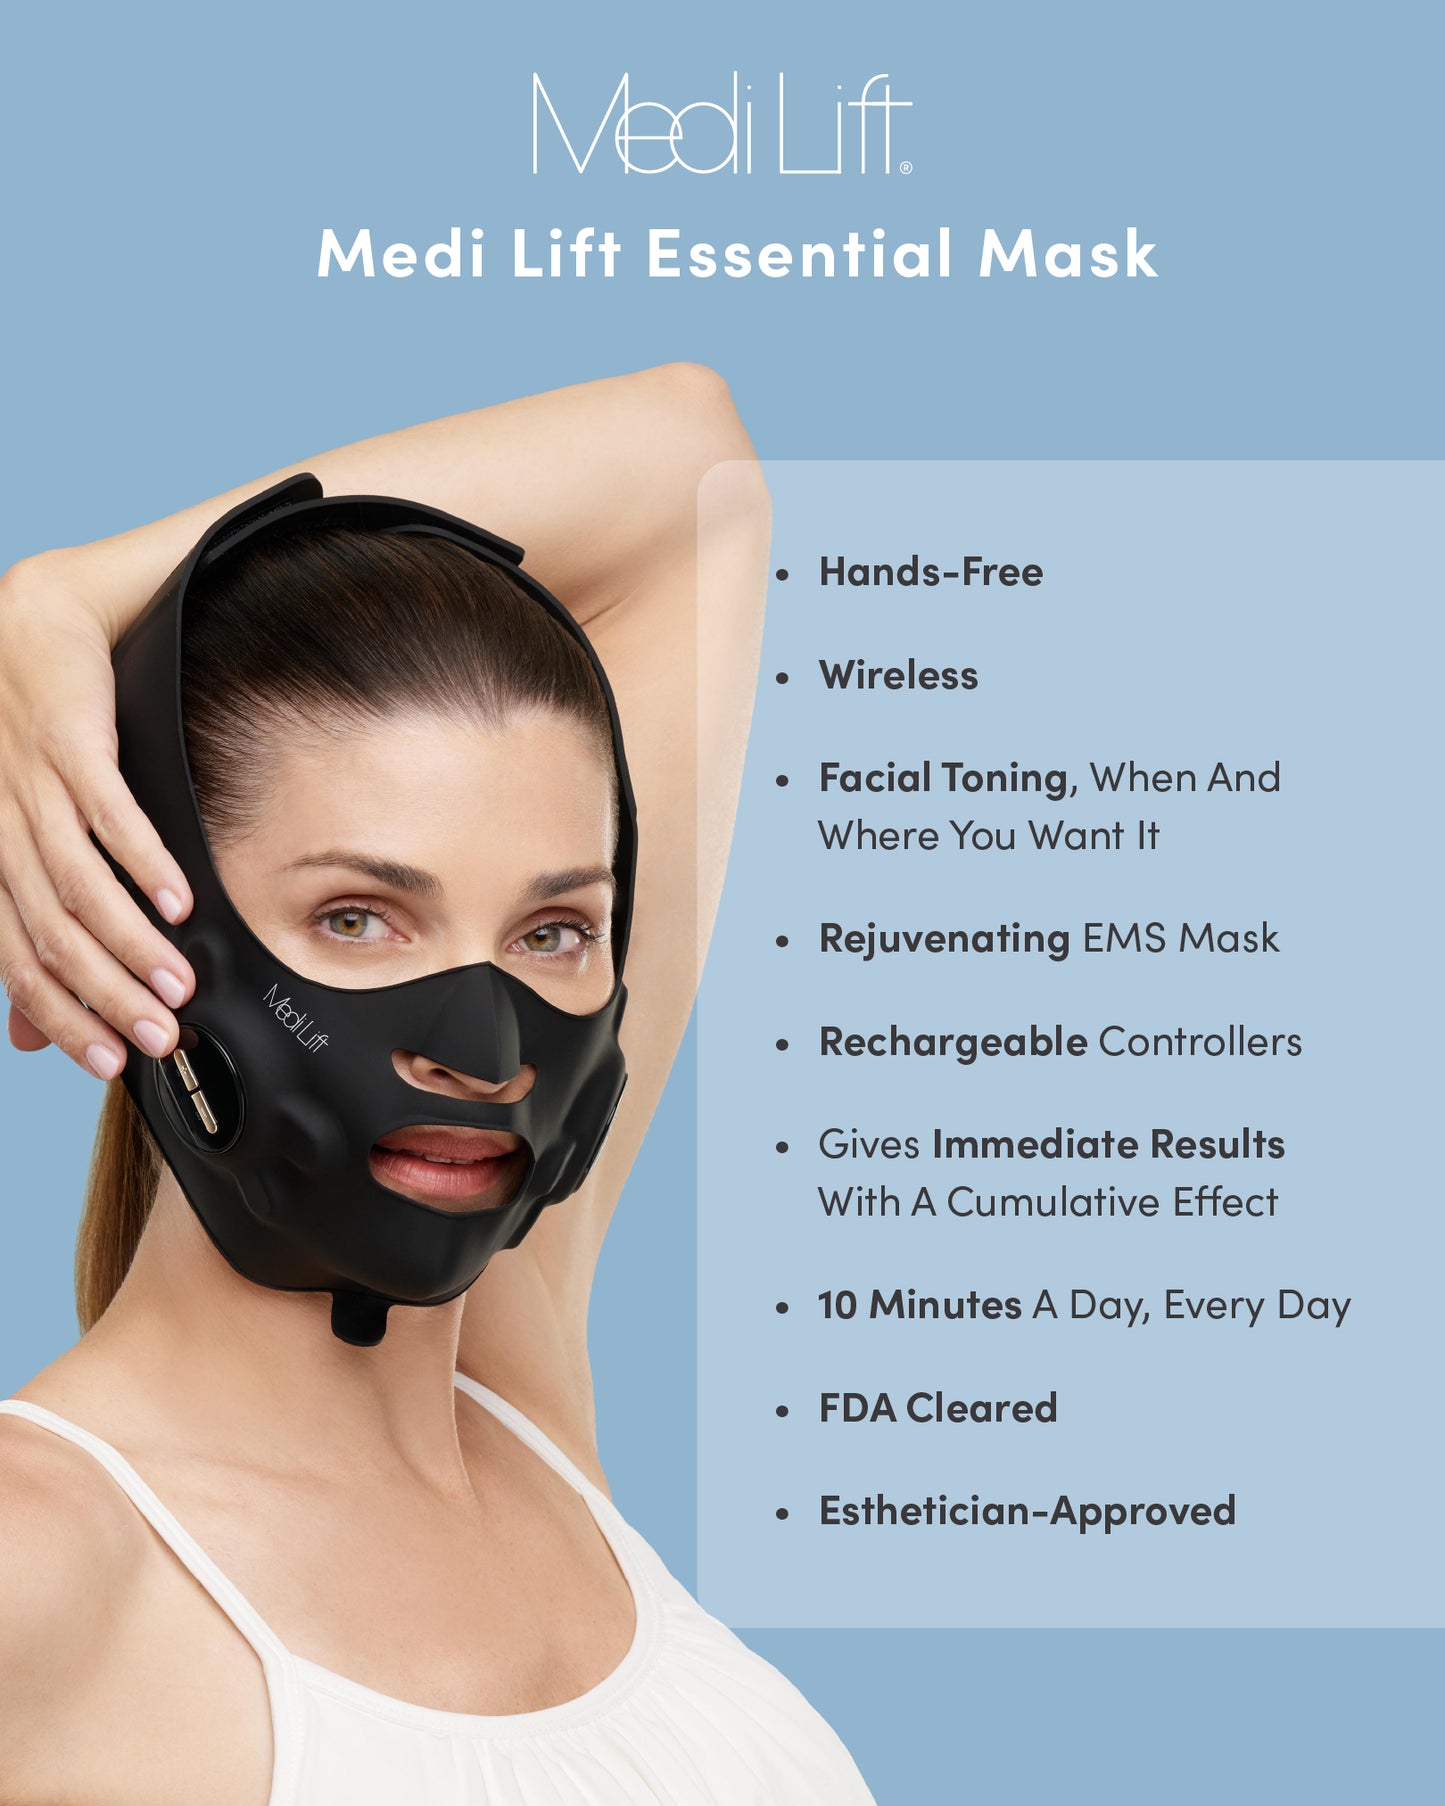 Medi Lift Essential Mask